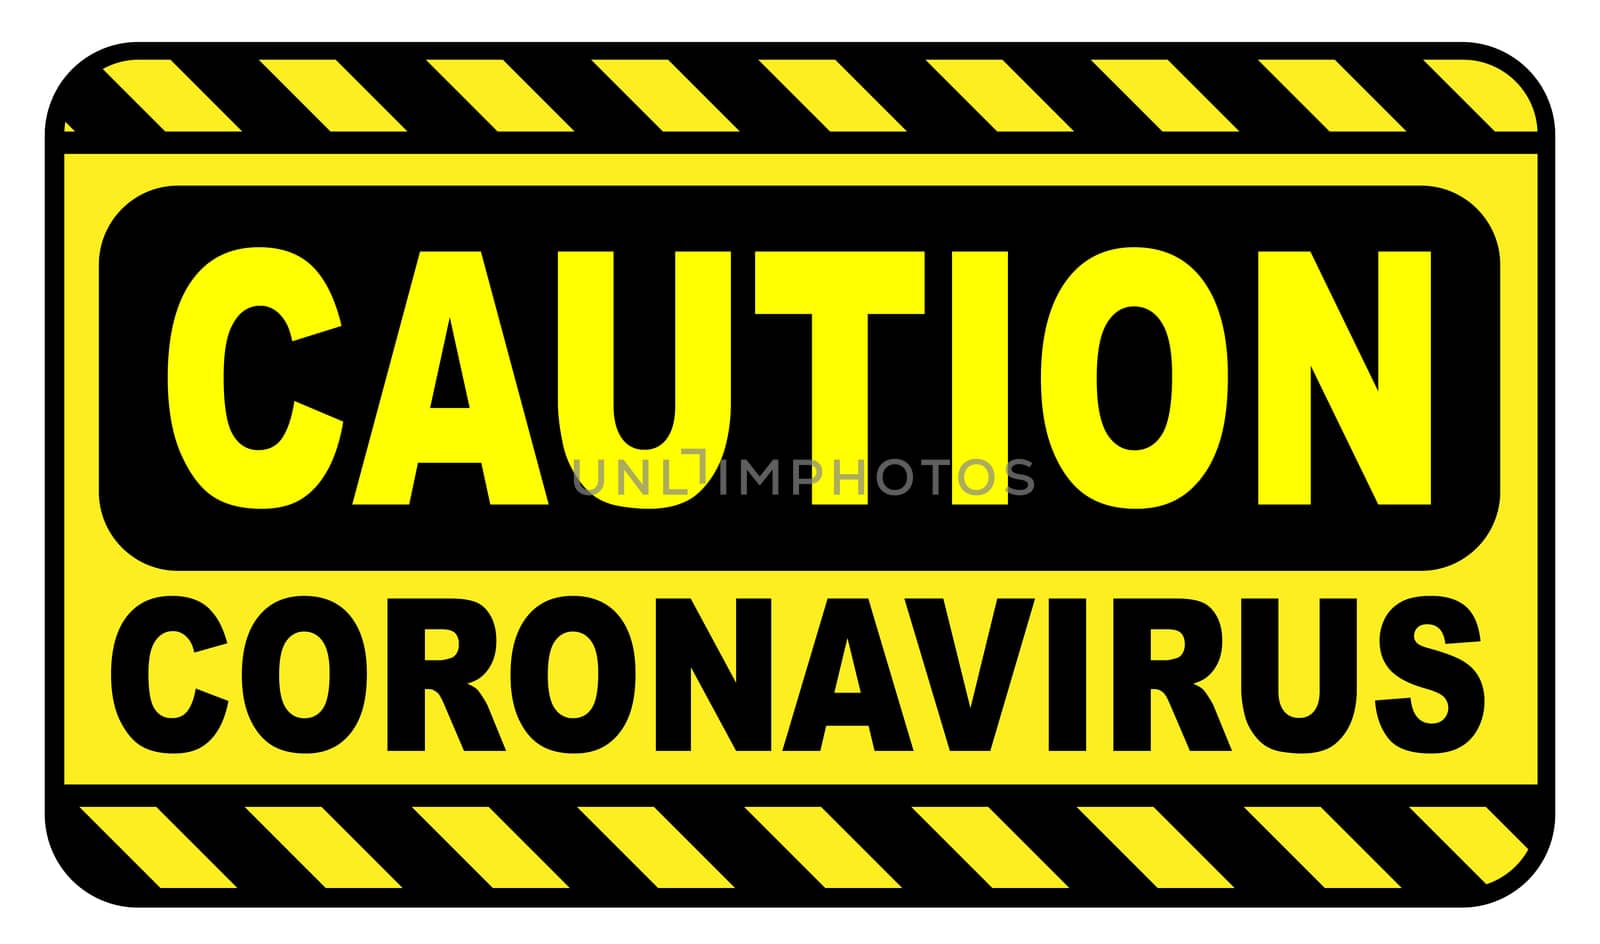 Caution Coronavirus Covid 19 Sign by Bigalbaloo